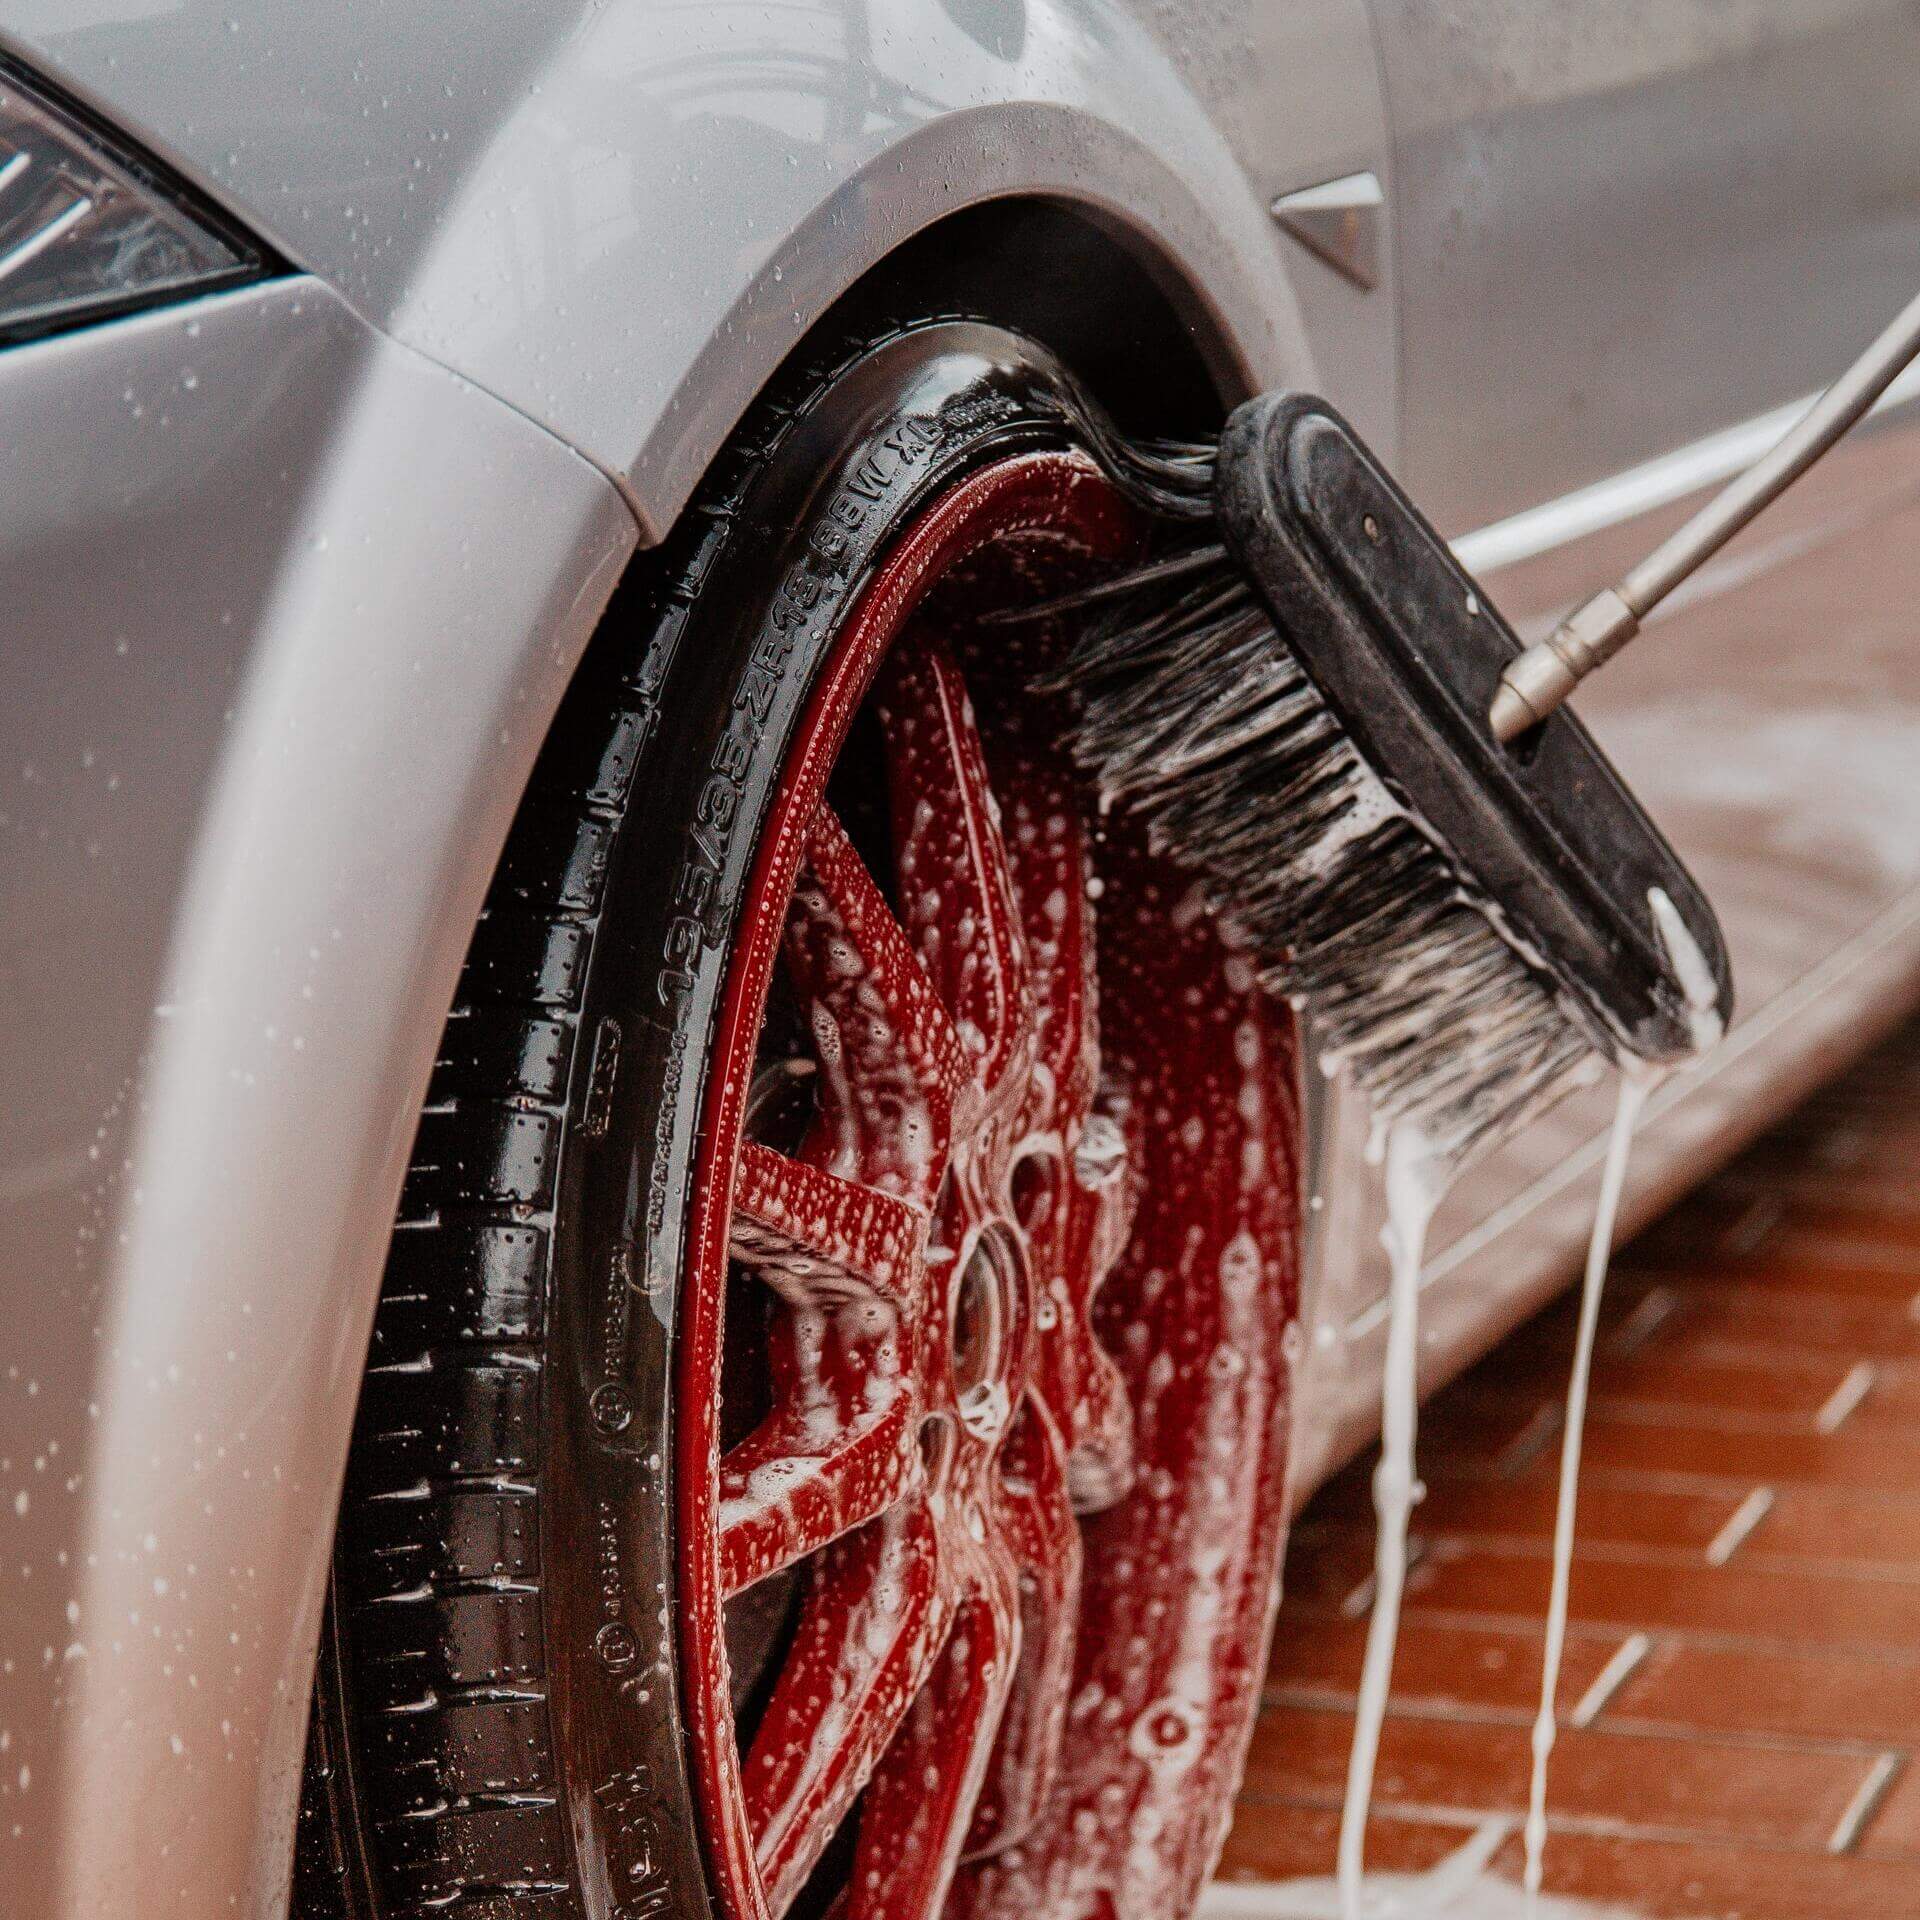 Car wash detail